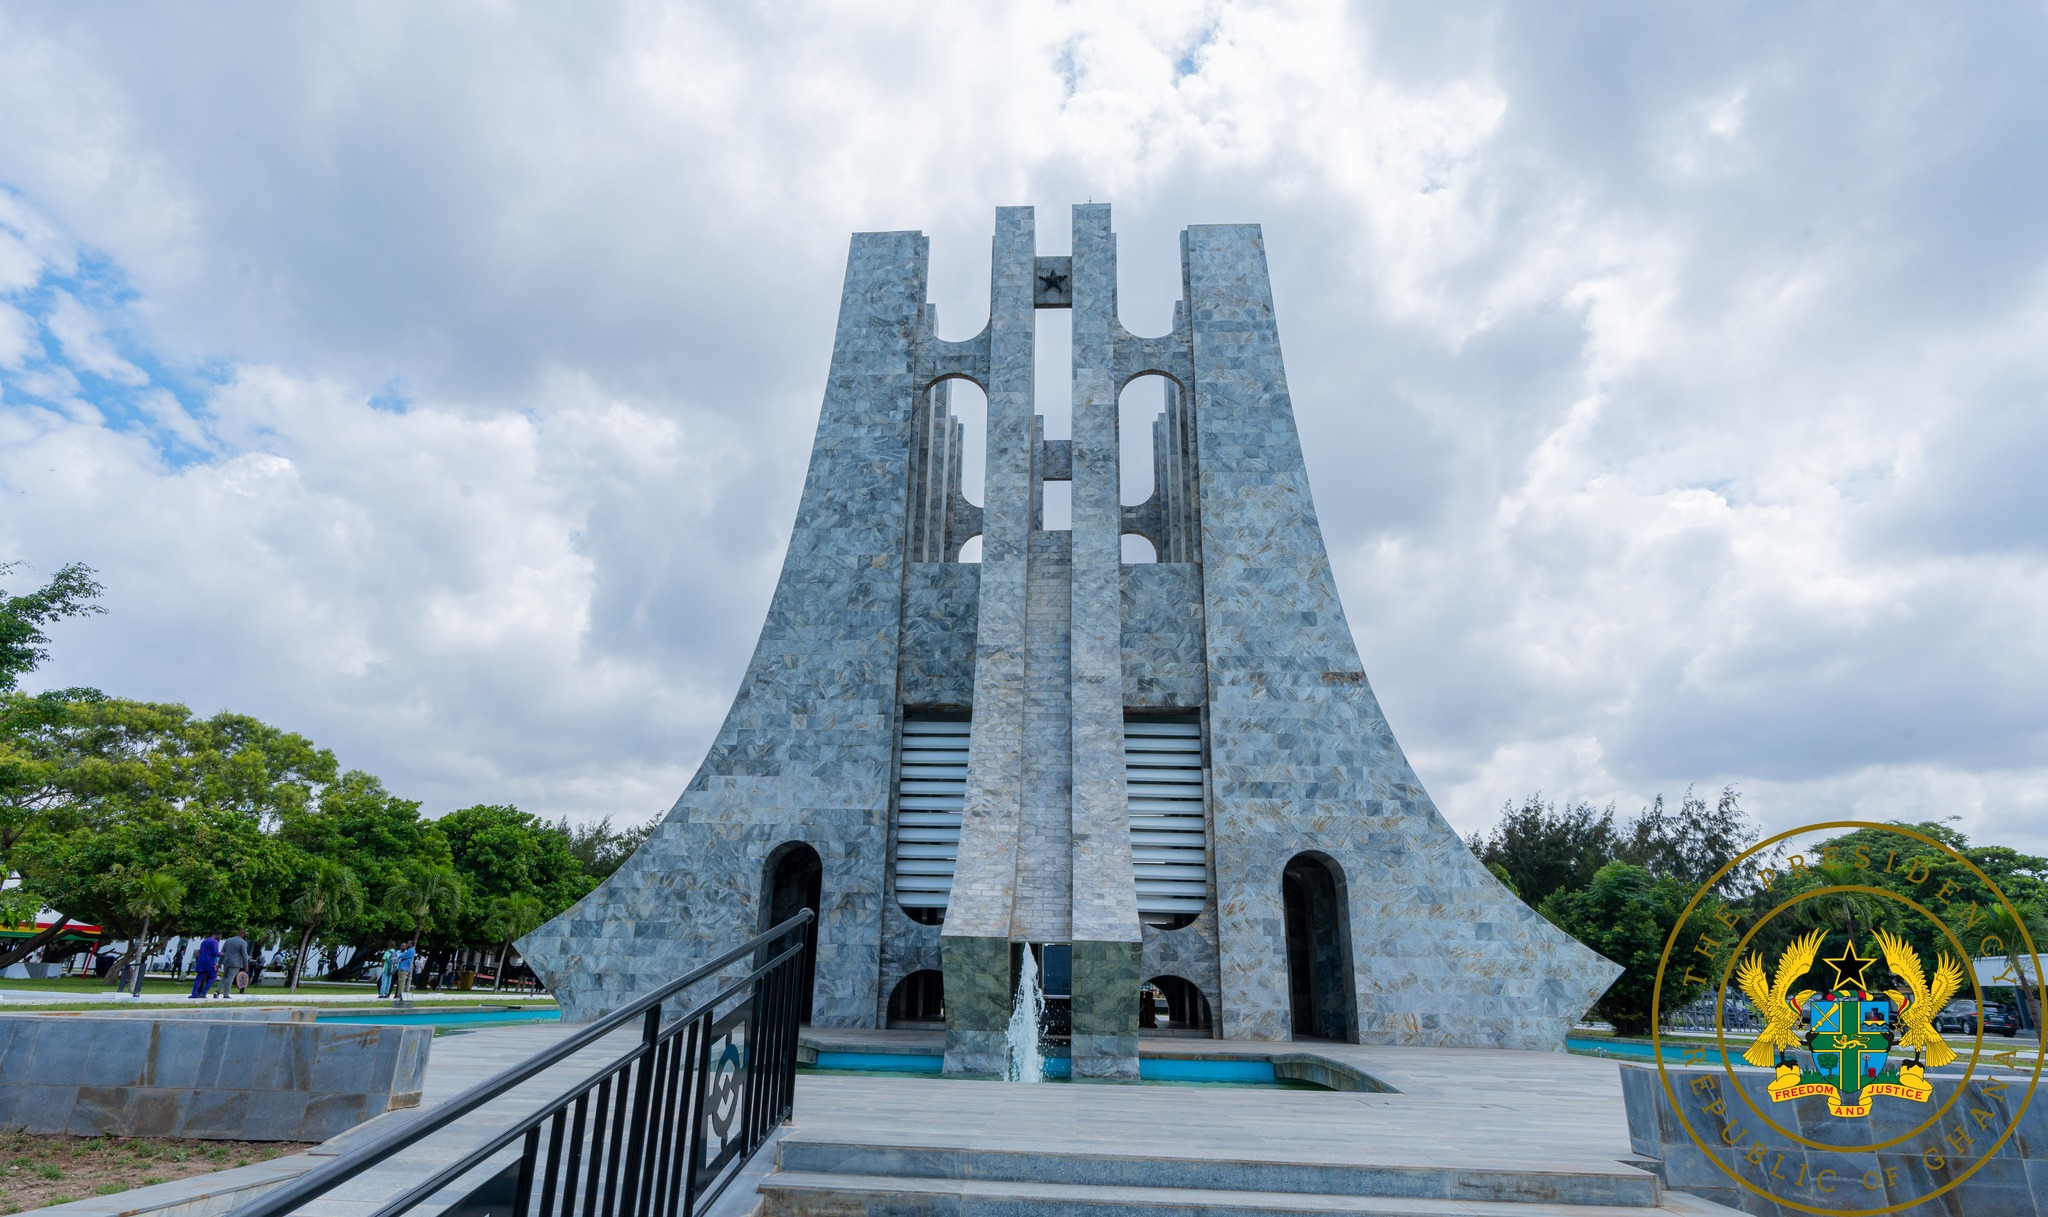 Heritage: Kwame Nkrumah, the visionary who took Ghana to